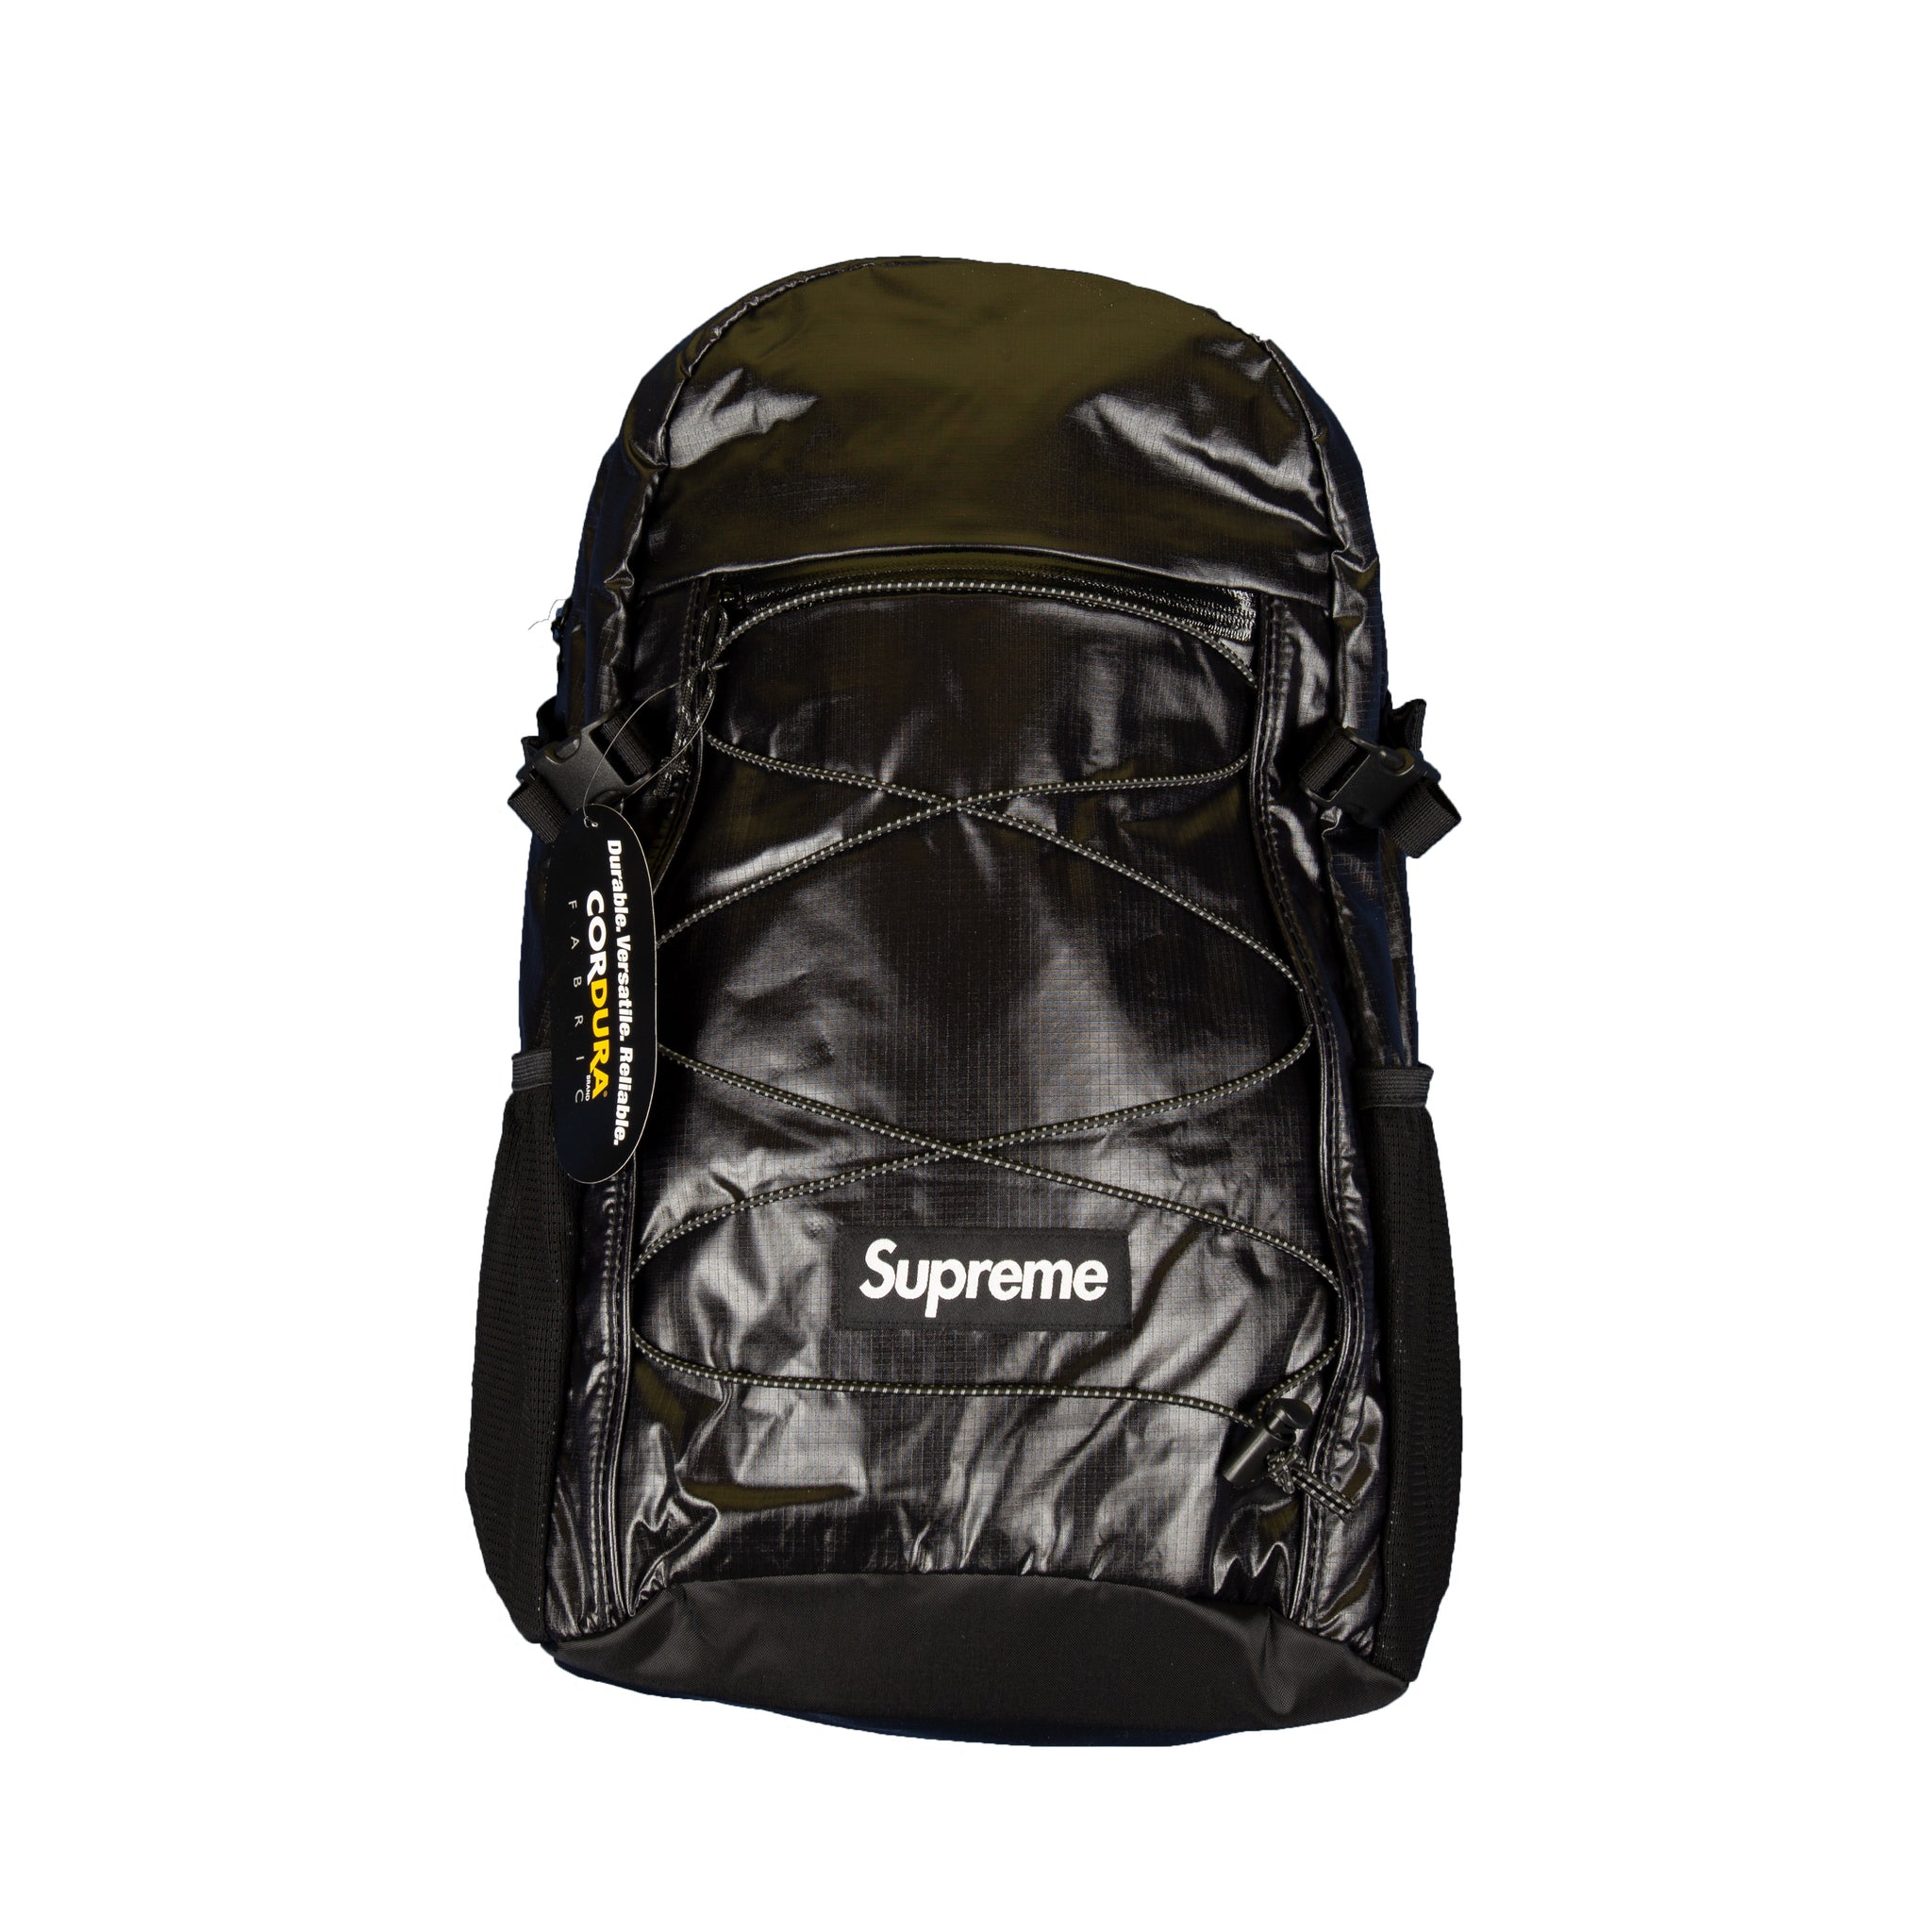 Supreme Black FW17 Backpack